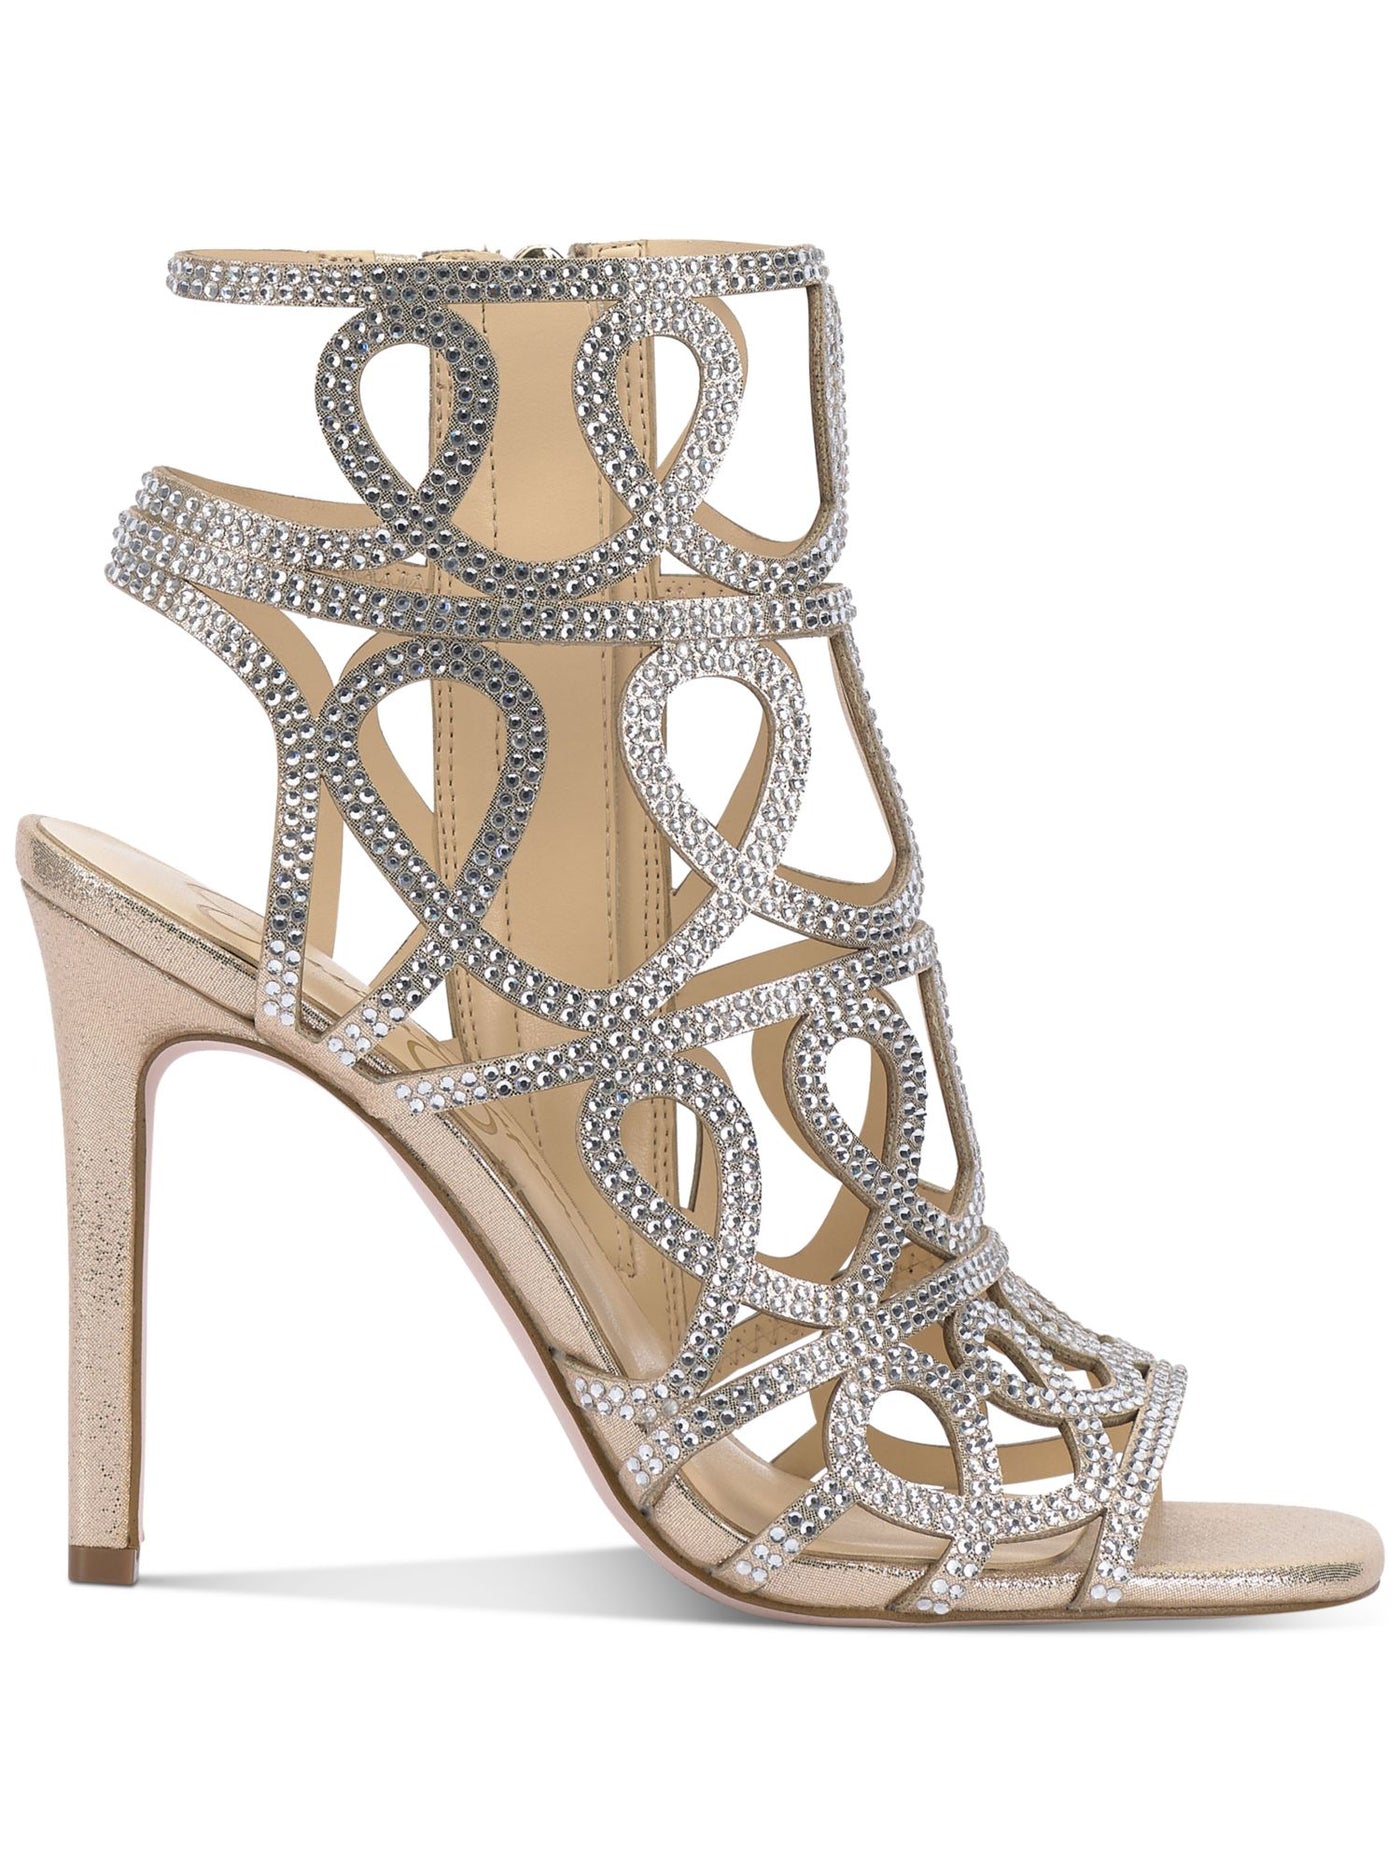 JESSICA SIMPSON Womens Gold Padded Rhinestone Strappy Opalite Open Toe Stiletto Zip-Up Dress Heeled Sandal 11 M